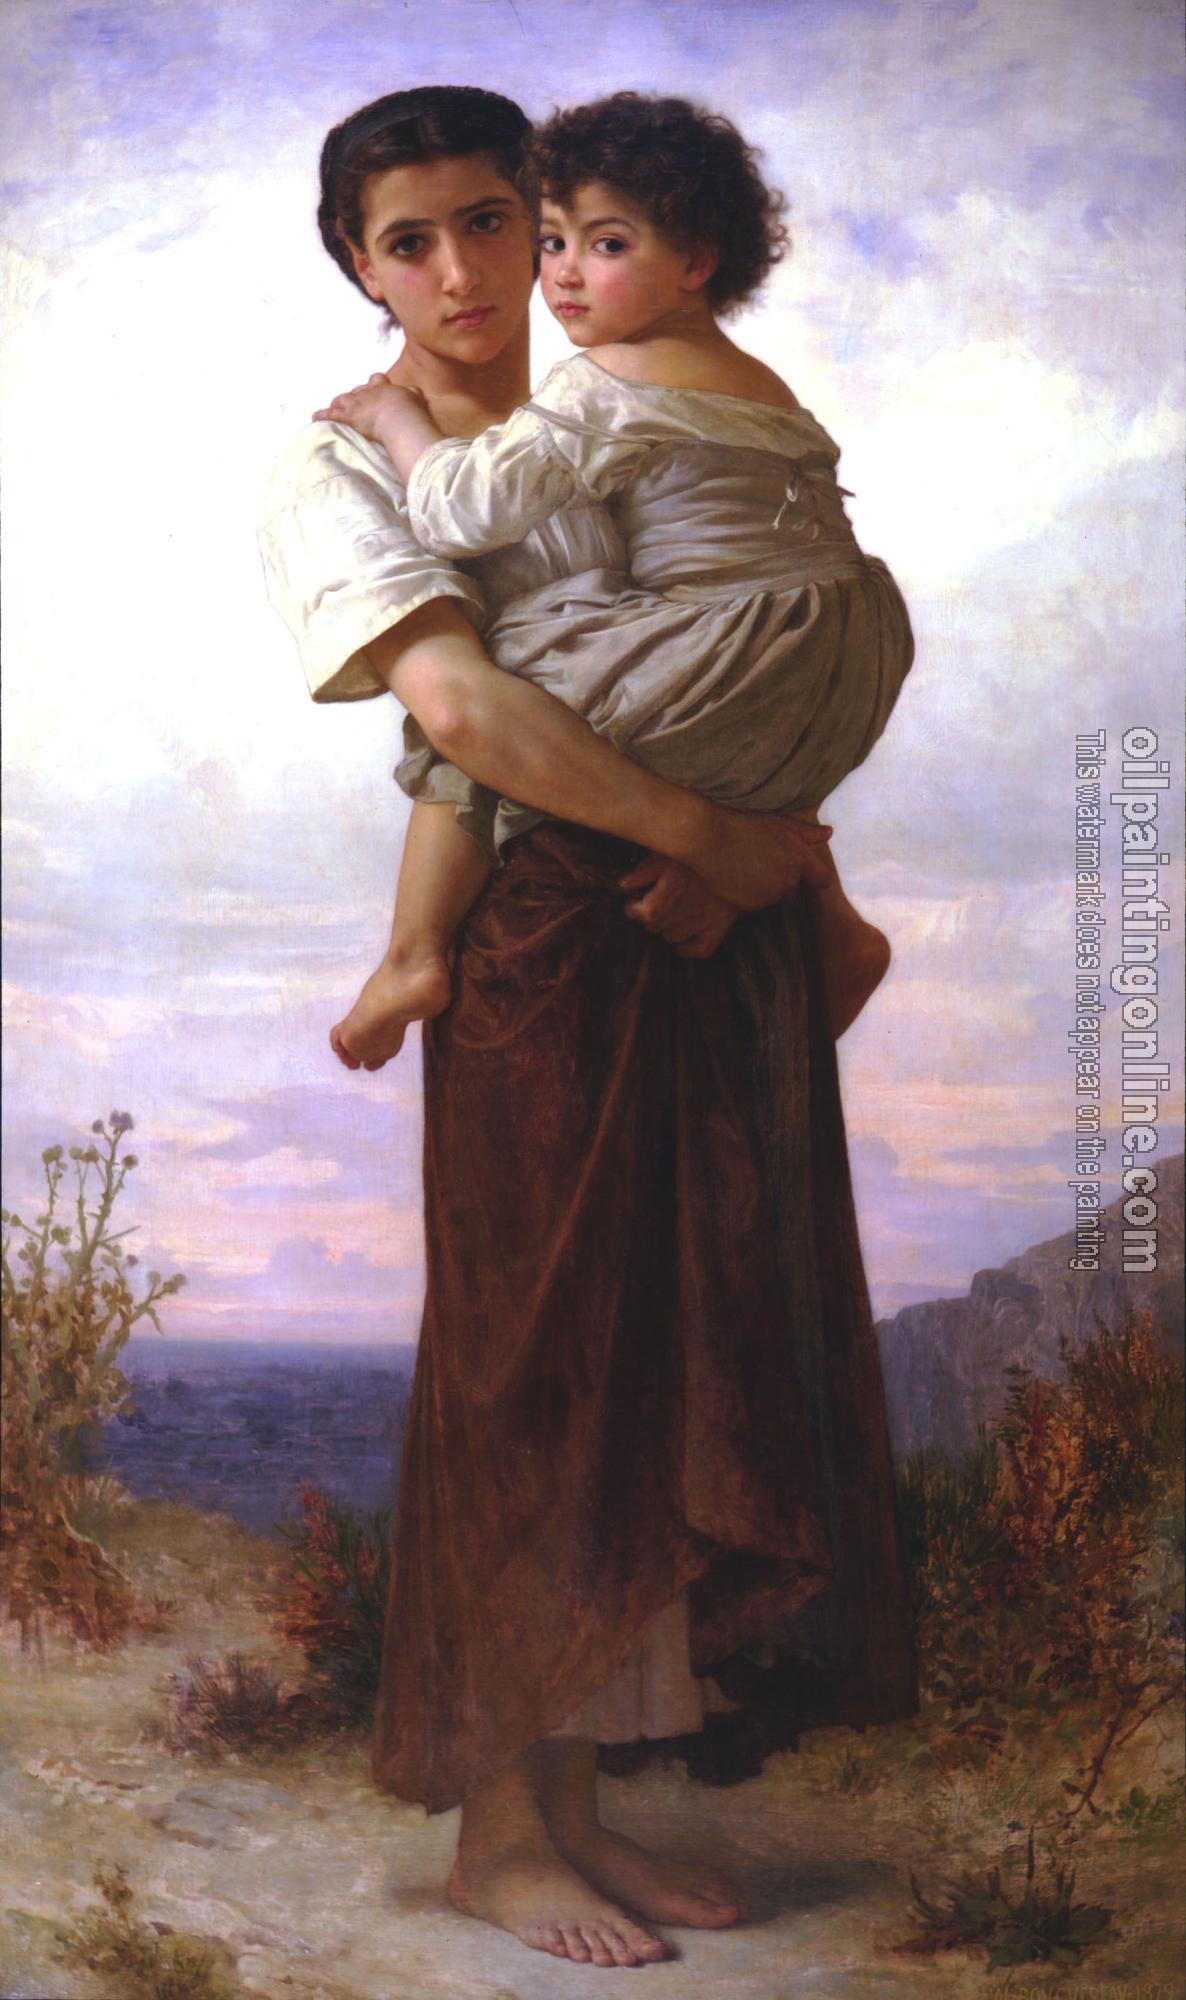 Bouguereau, William-Adolphe - Young Gypsies